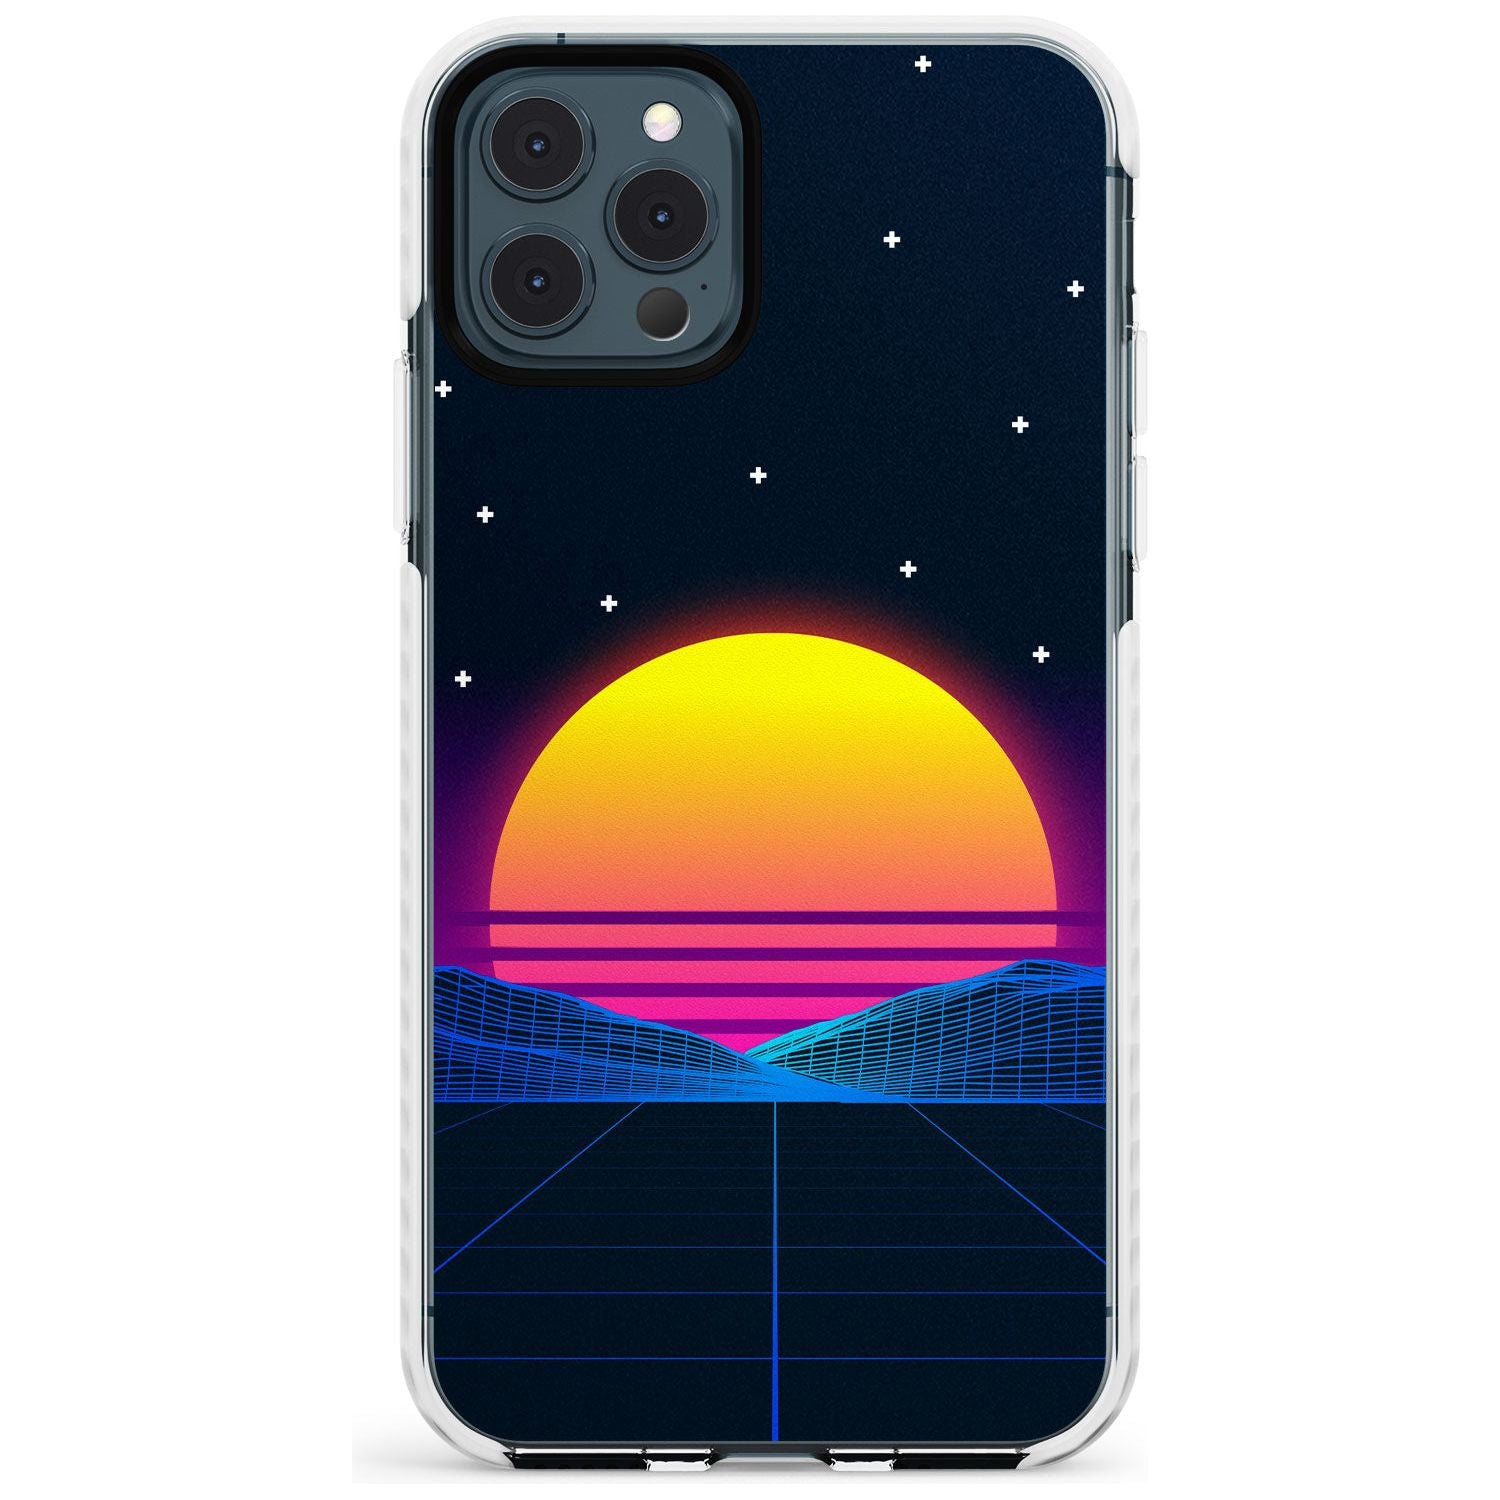 Retro Sunset Vaporwave Impact Phone Case for iPhone 11 Pro Max